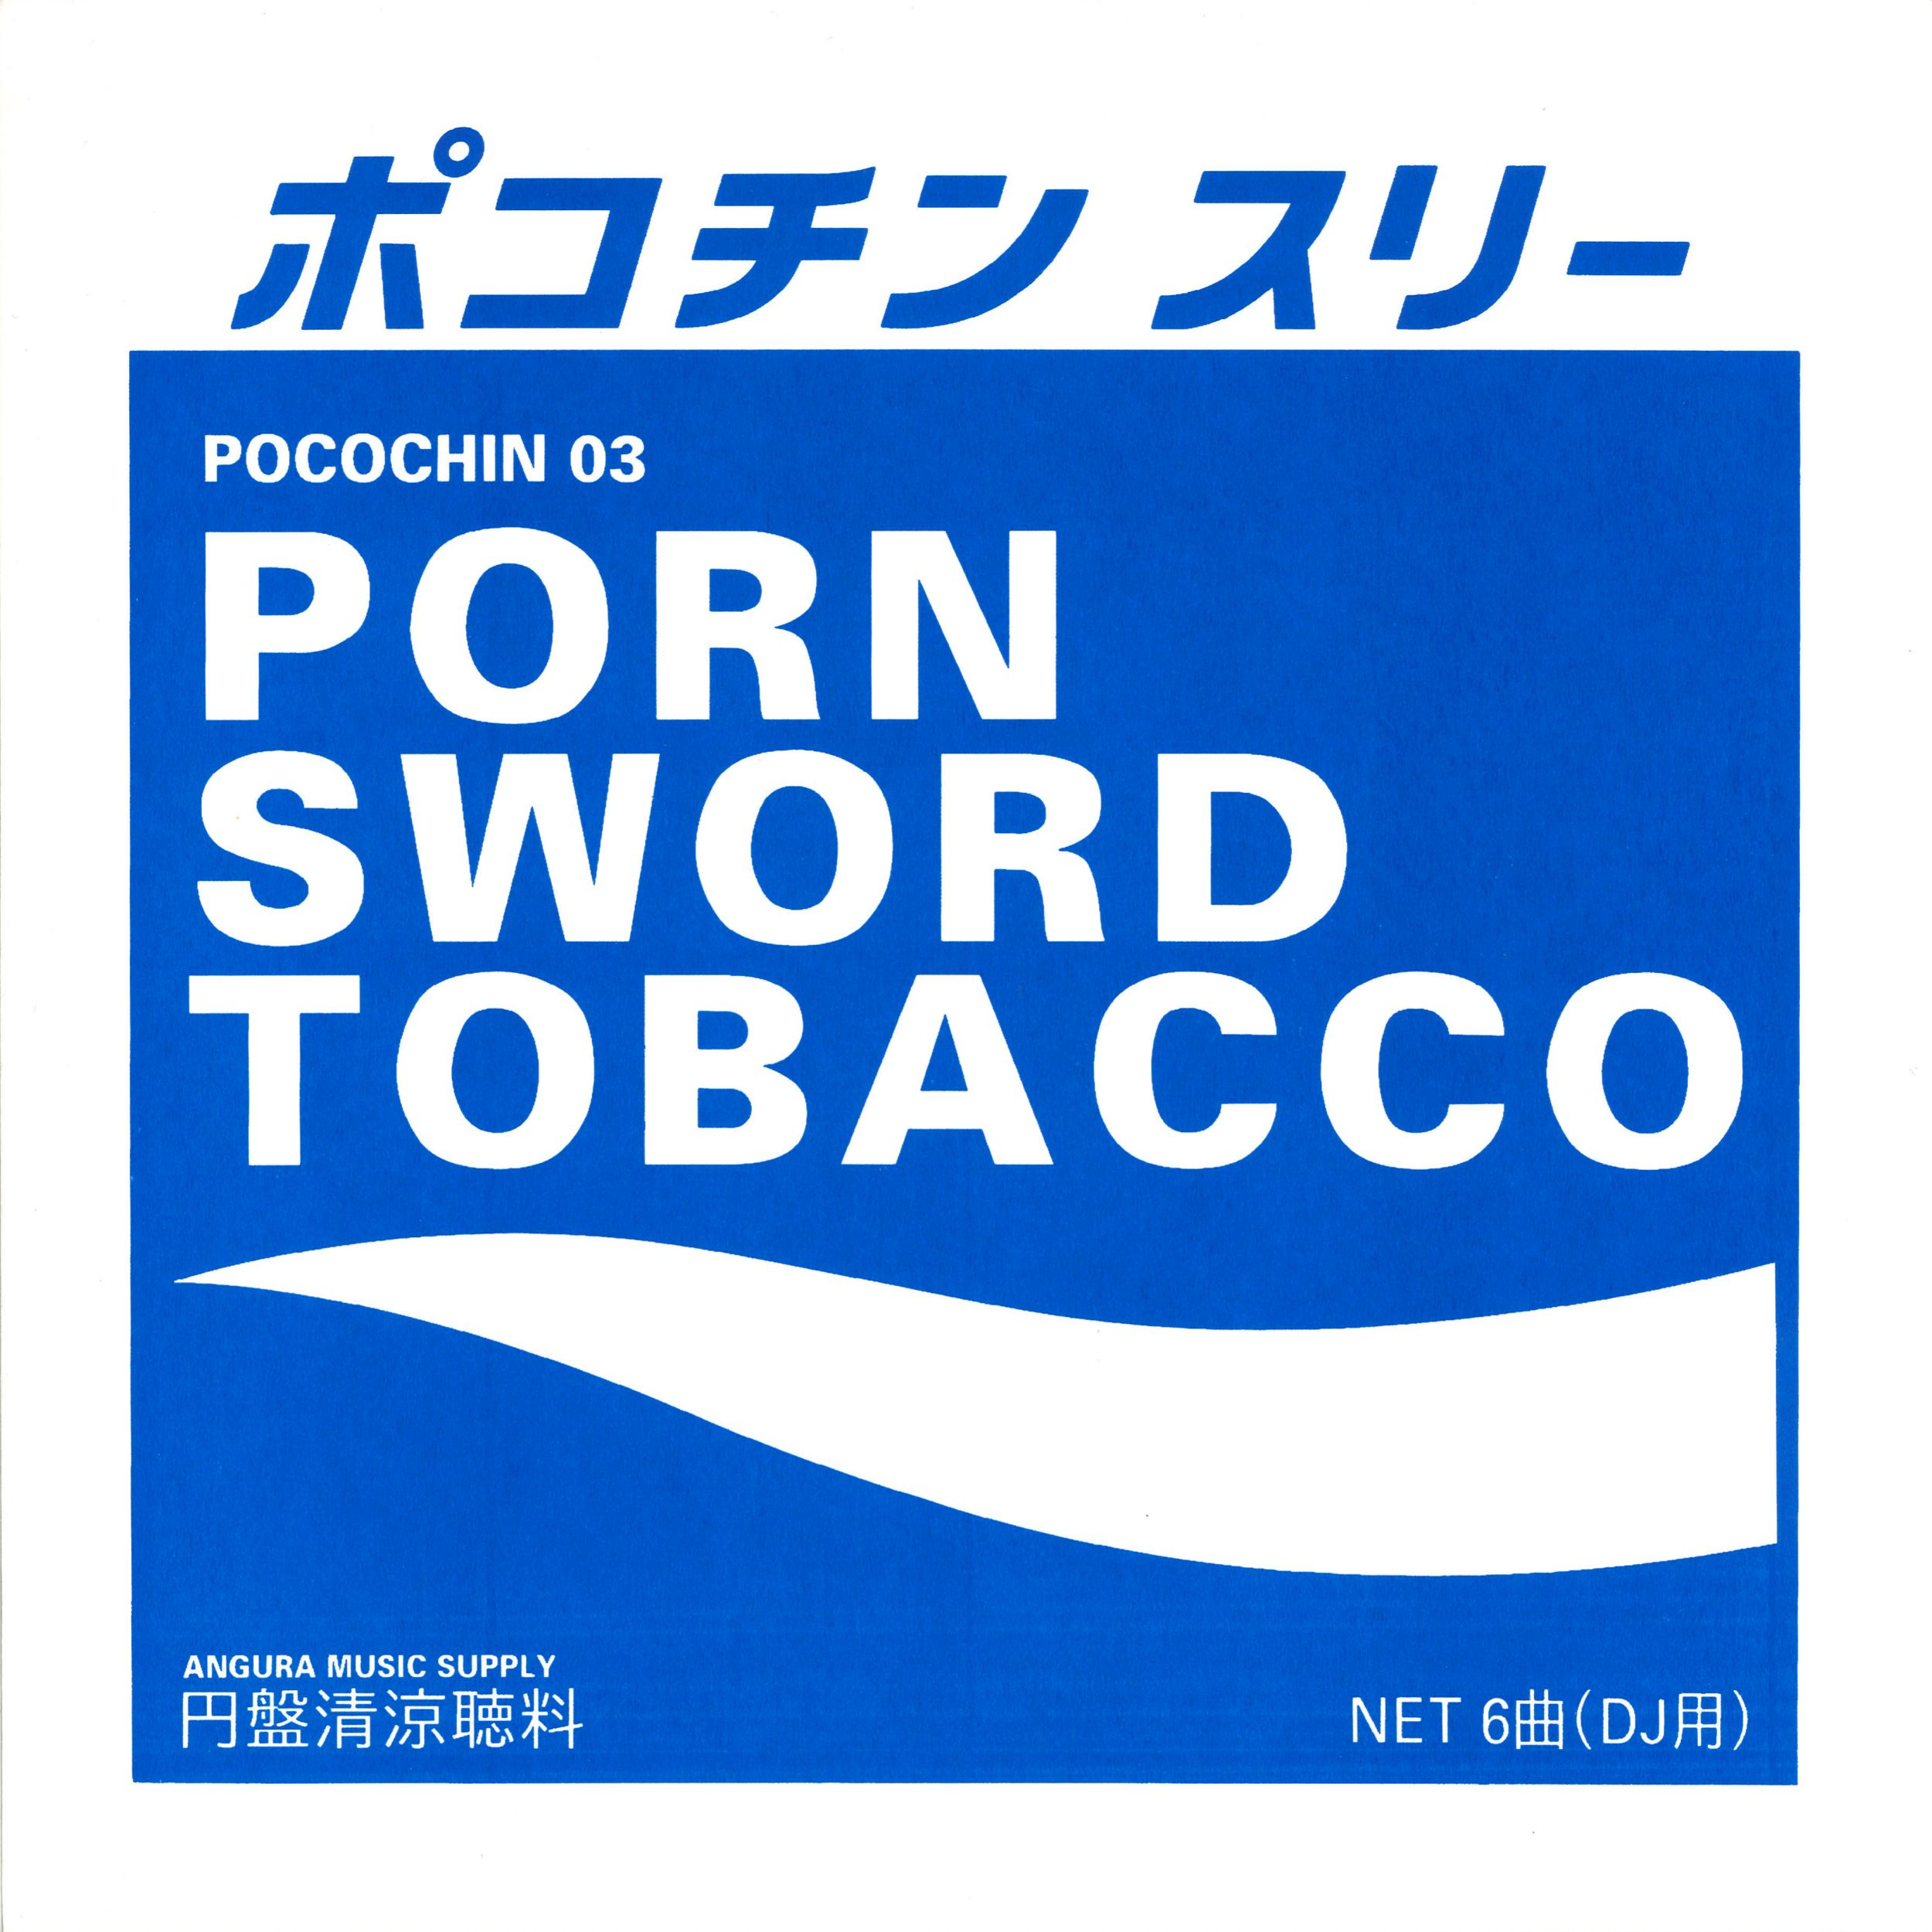 Porn Sword Tobacco - Pocochin 03 : LP